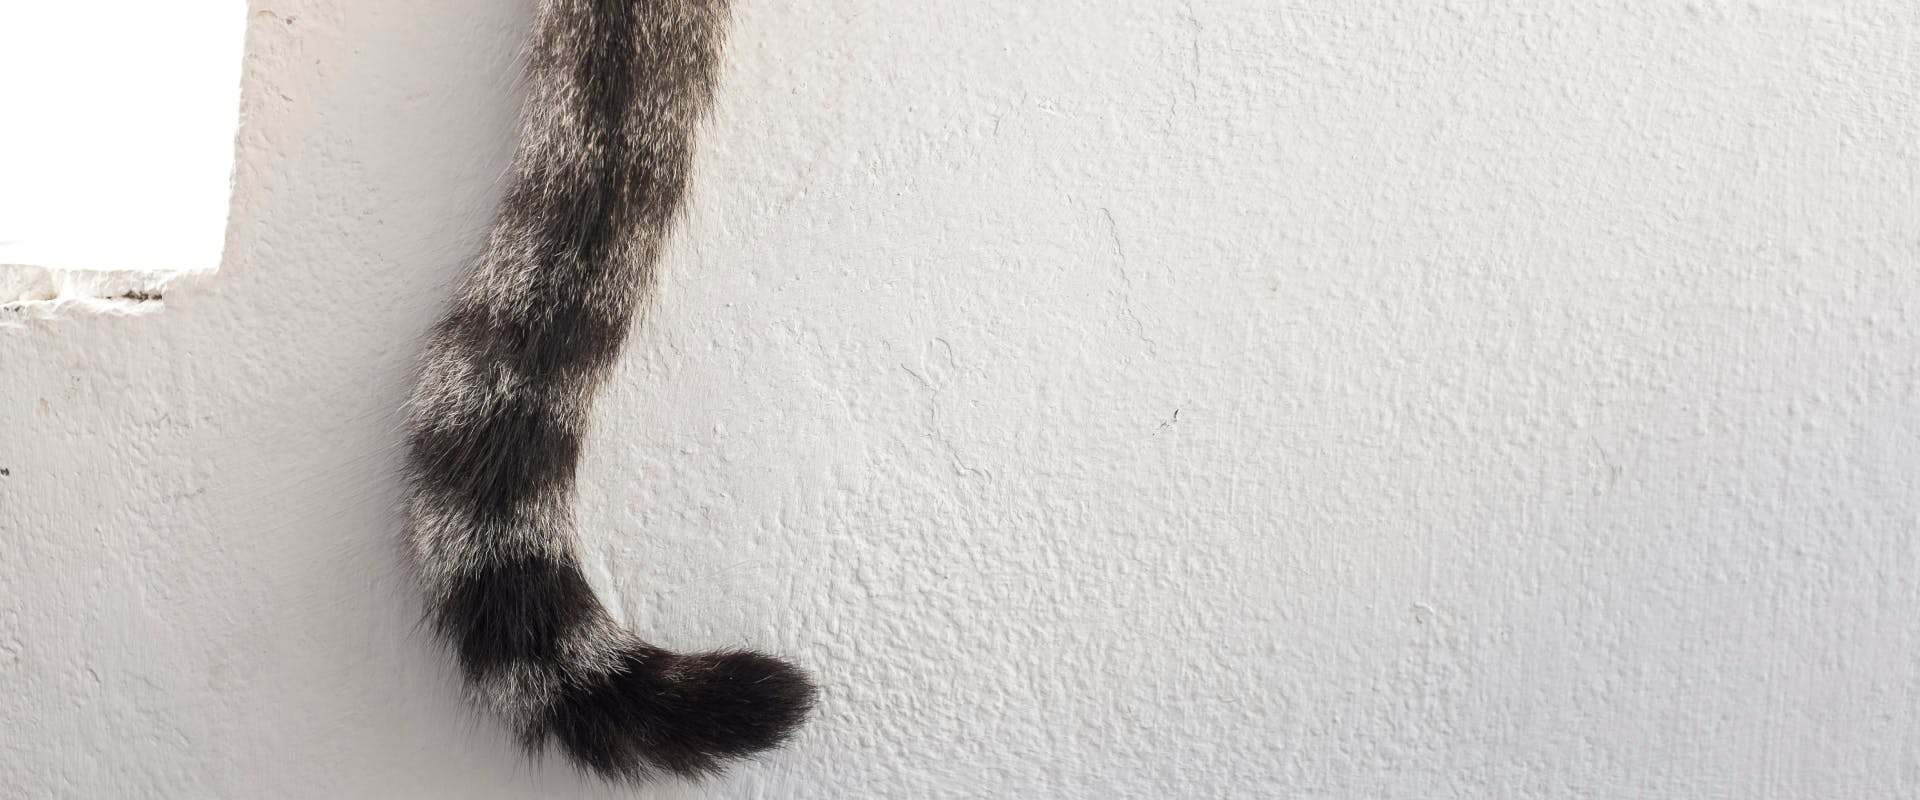 a stripy cat's tail draped down a white outside wall